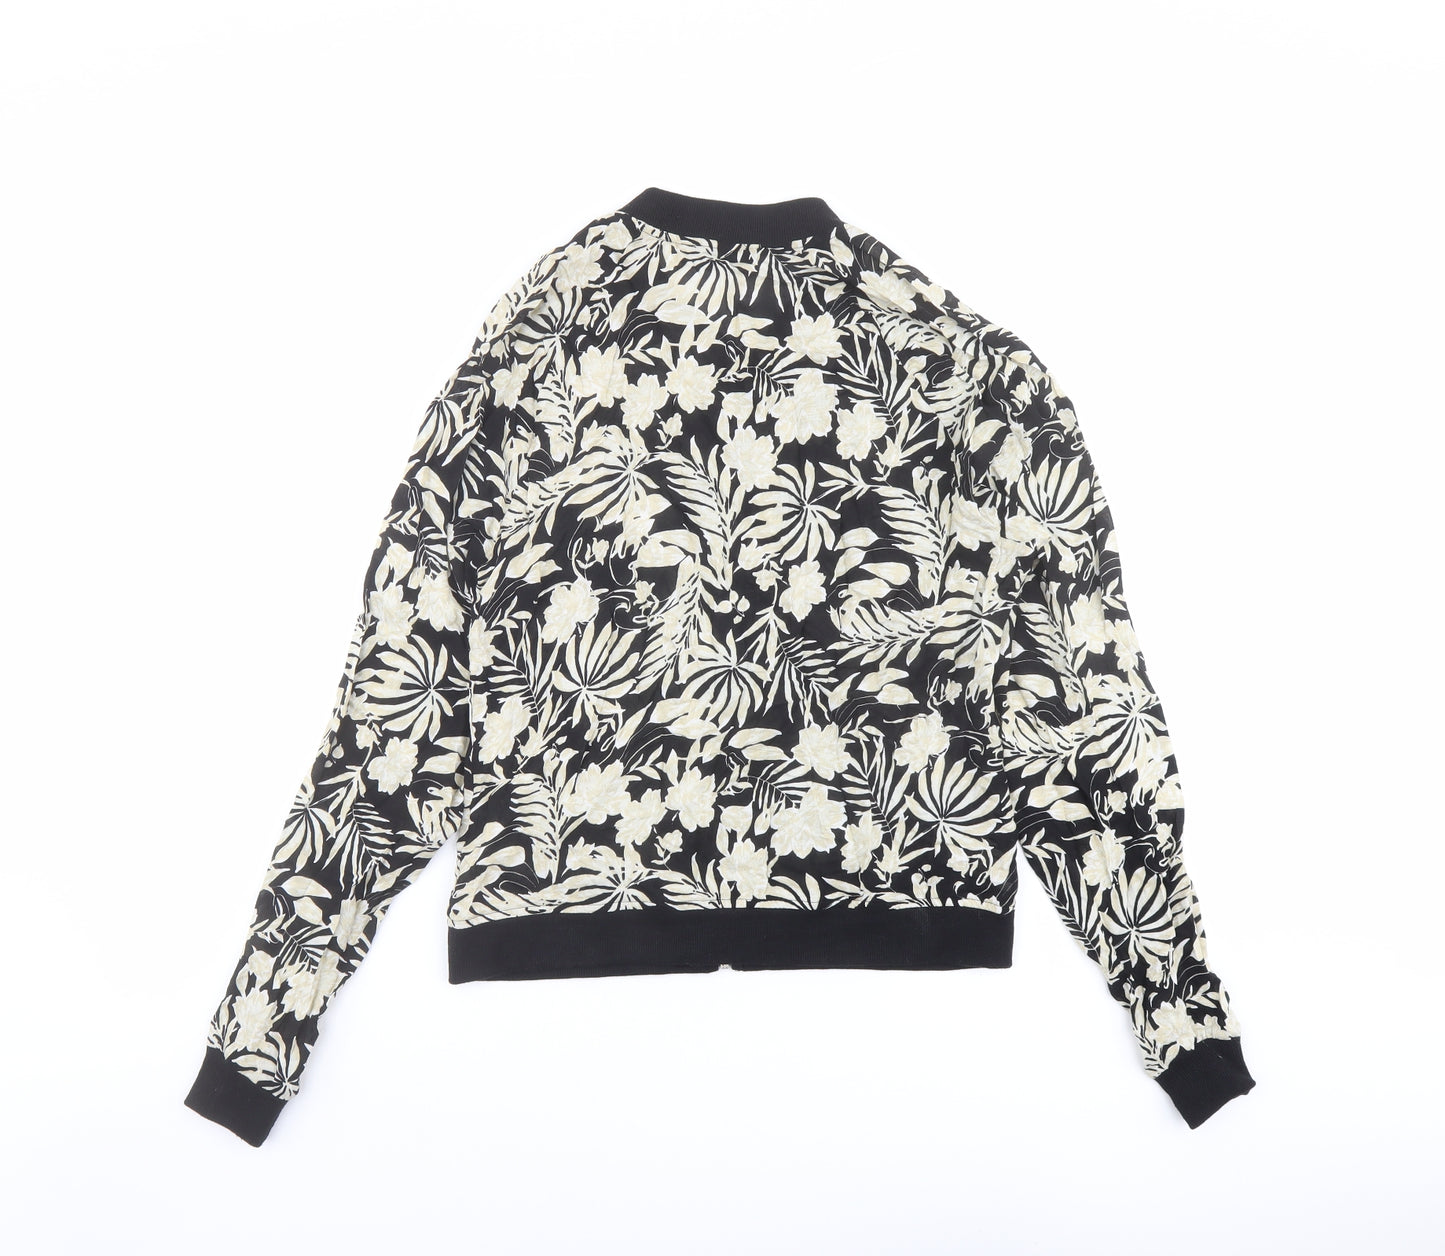 Select Womens Black Floral Bomber Jacket Jacket Size 12 Zip